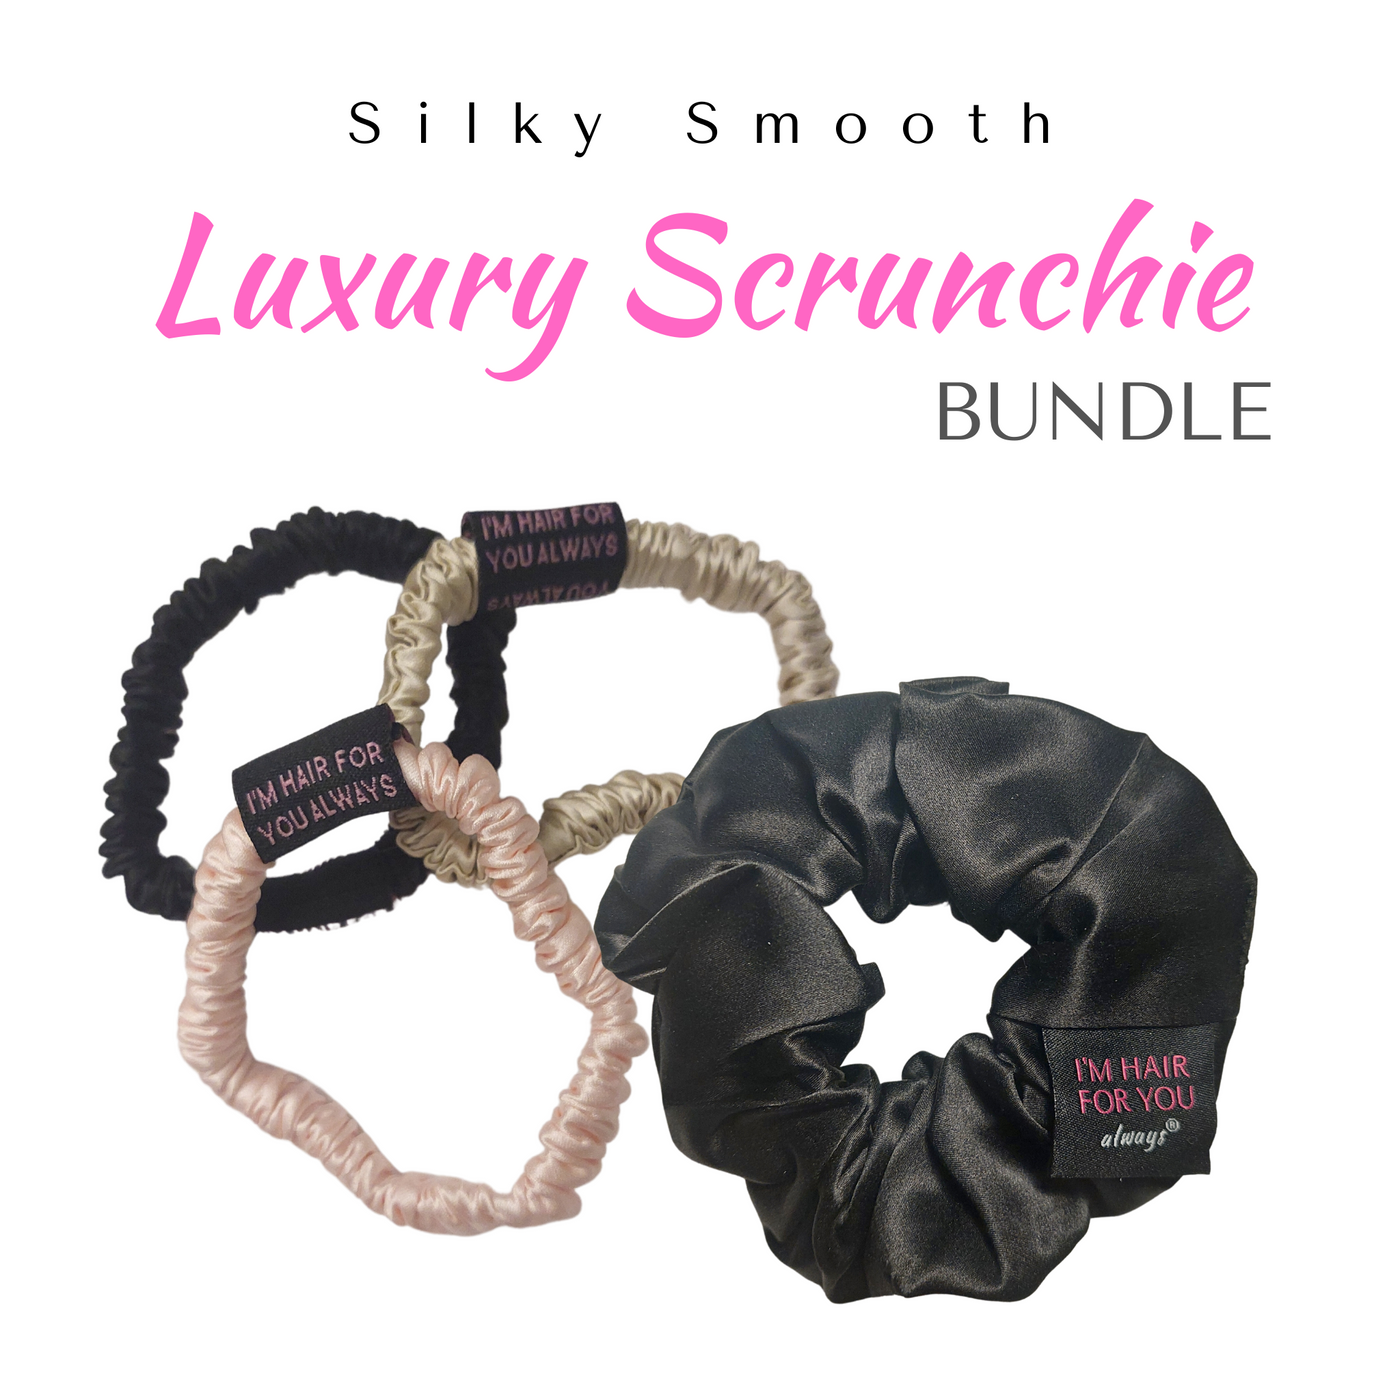 Silky Smooth - Luxury Scrunchie Bundle